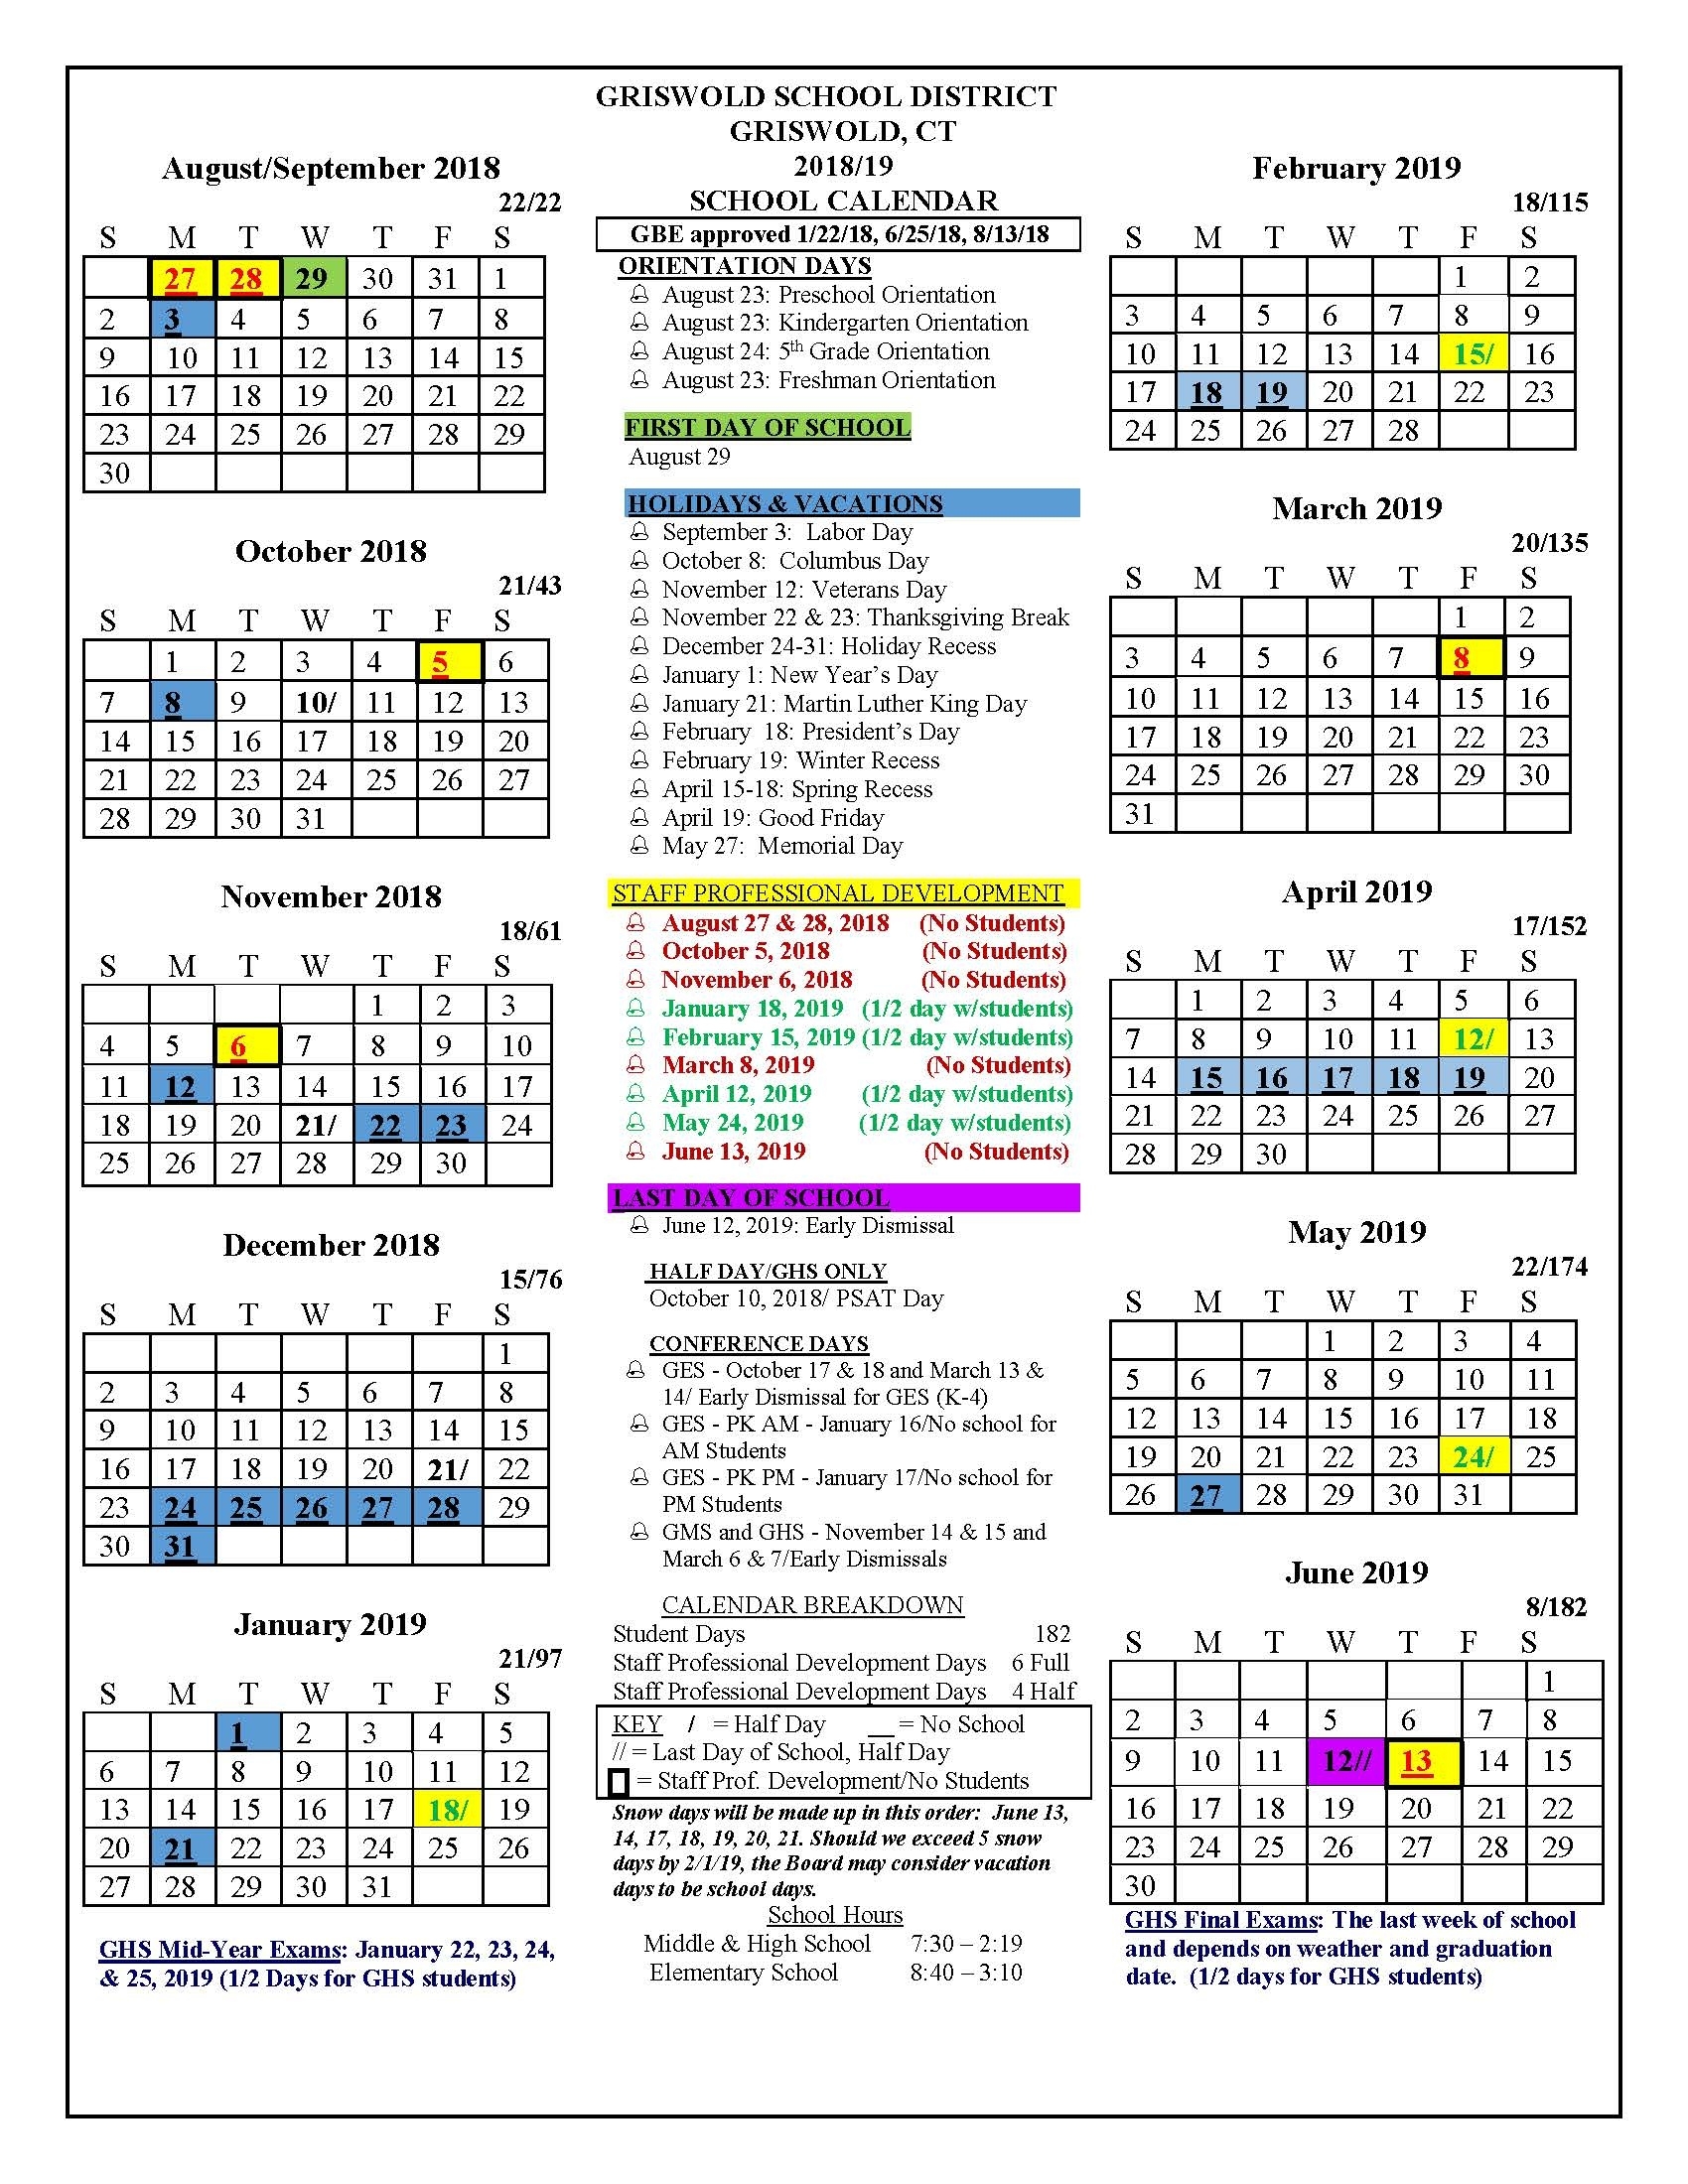 Board Approved Academic Calendar - Griswold Public Schools Extraordinary 2020 School Calendar Kzn